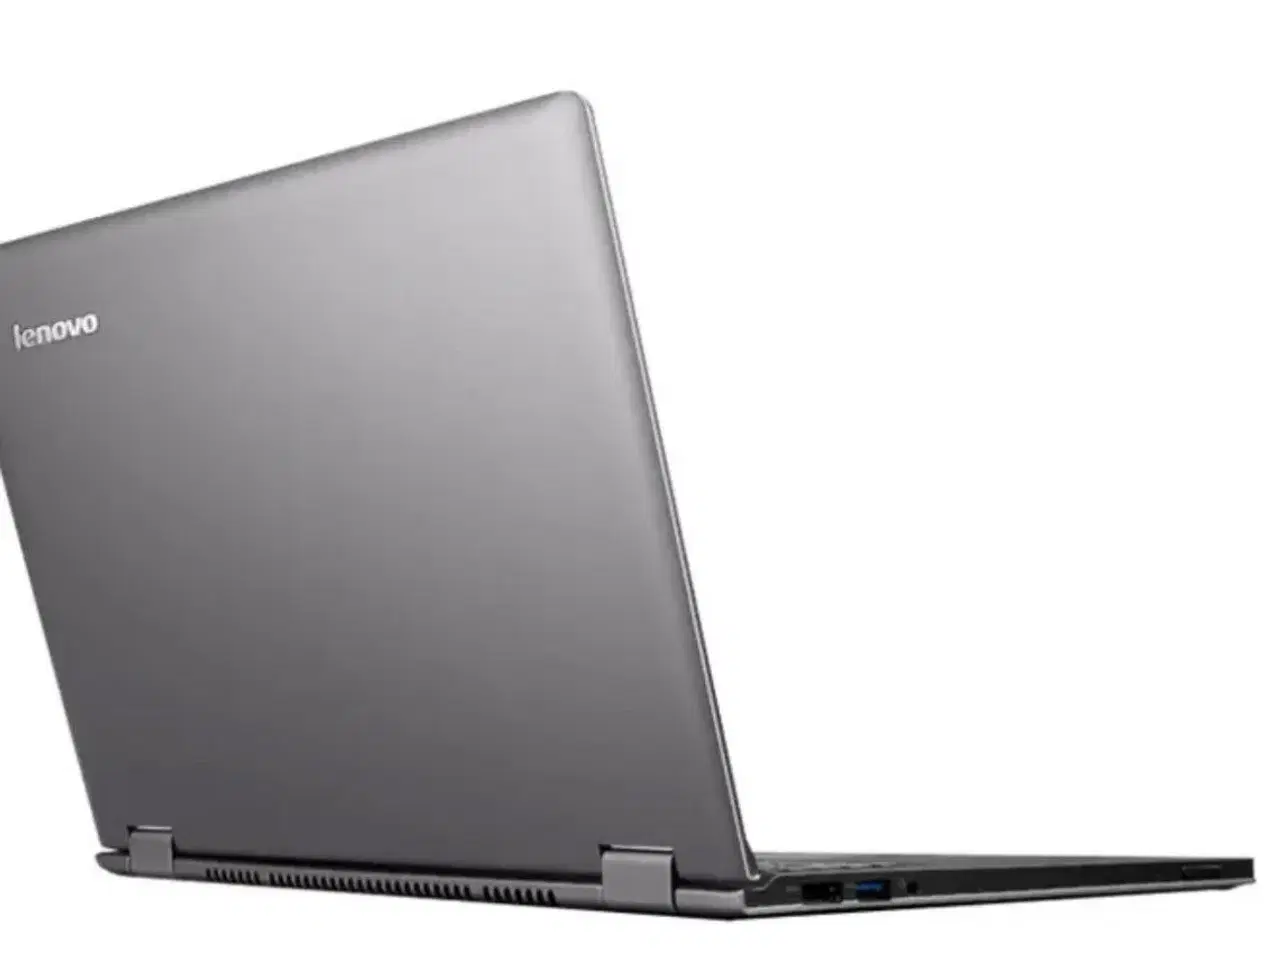 Billede 3 - Lenovo IdeaPad Yoga 13 model 2191 Core i7 4GB 128 